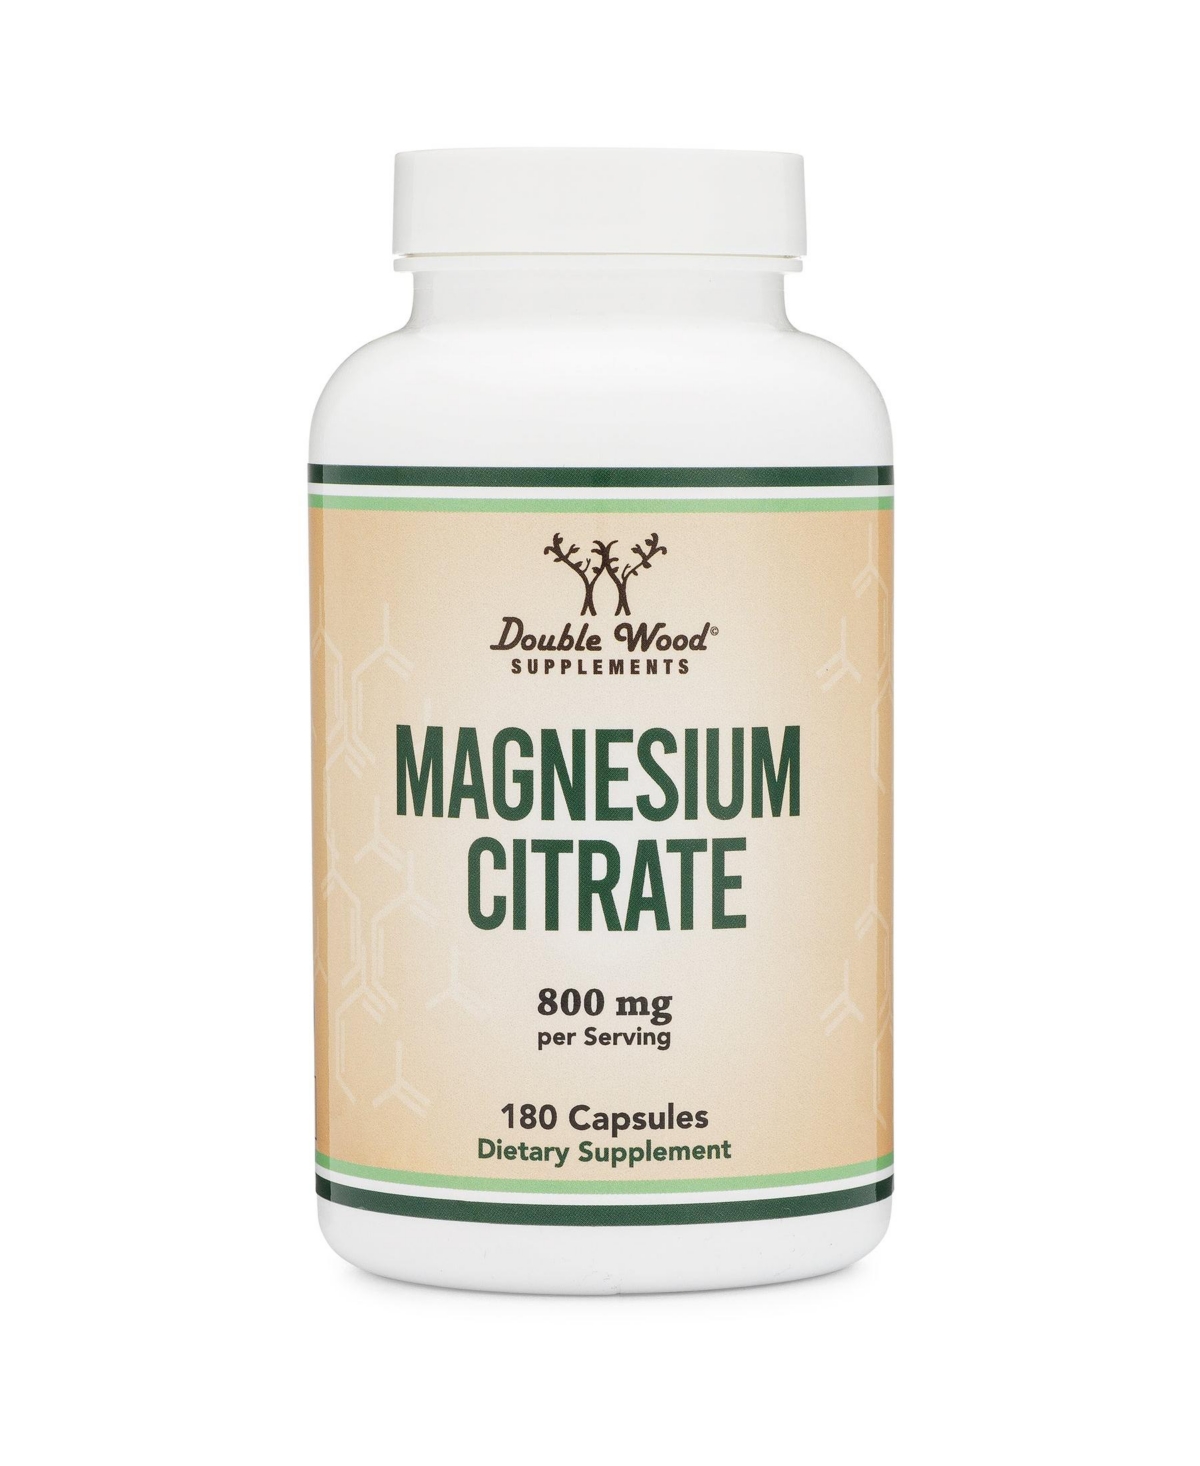 Magnesium Citrate - 180 capsules, 800 mg servings